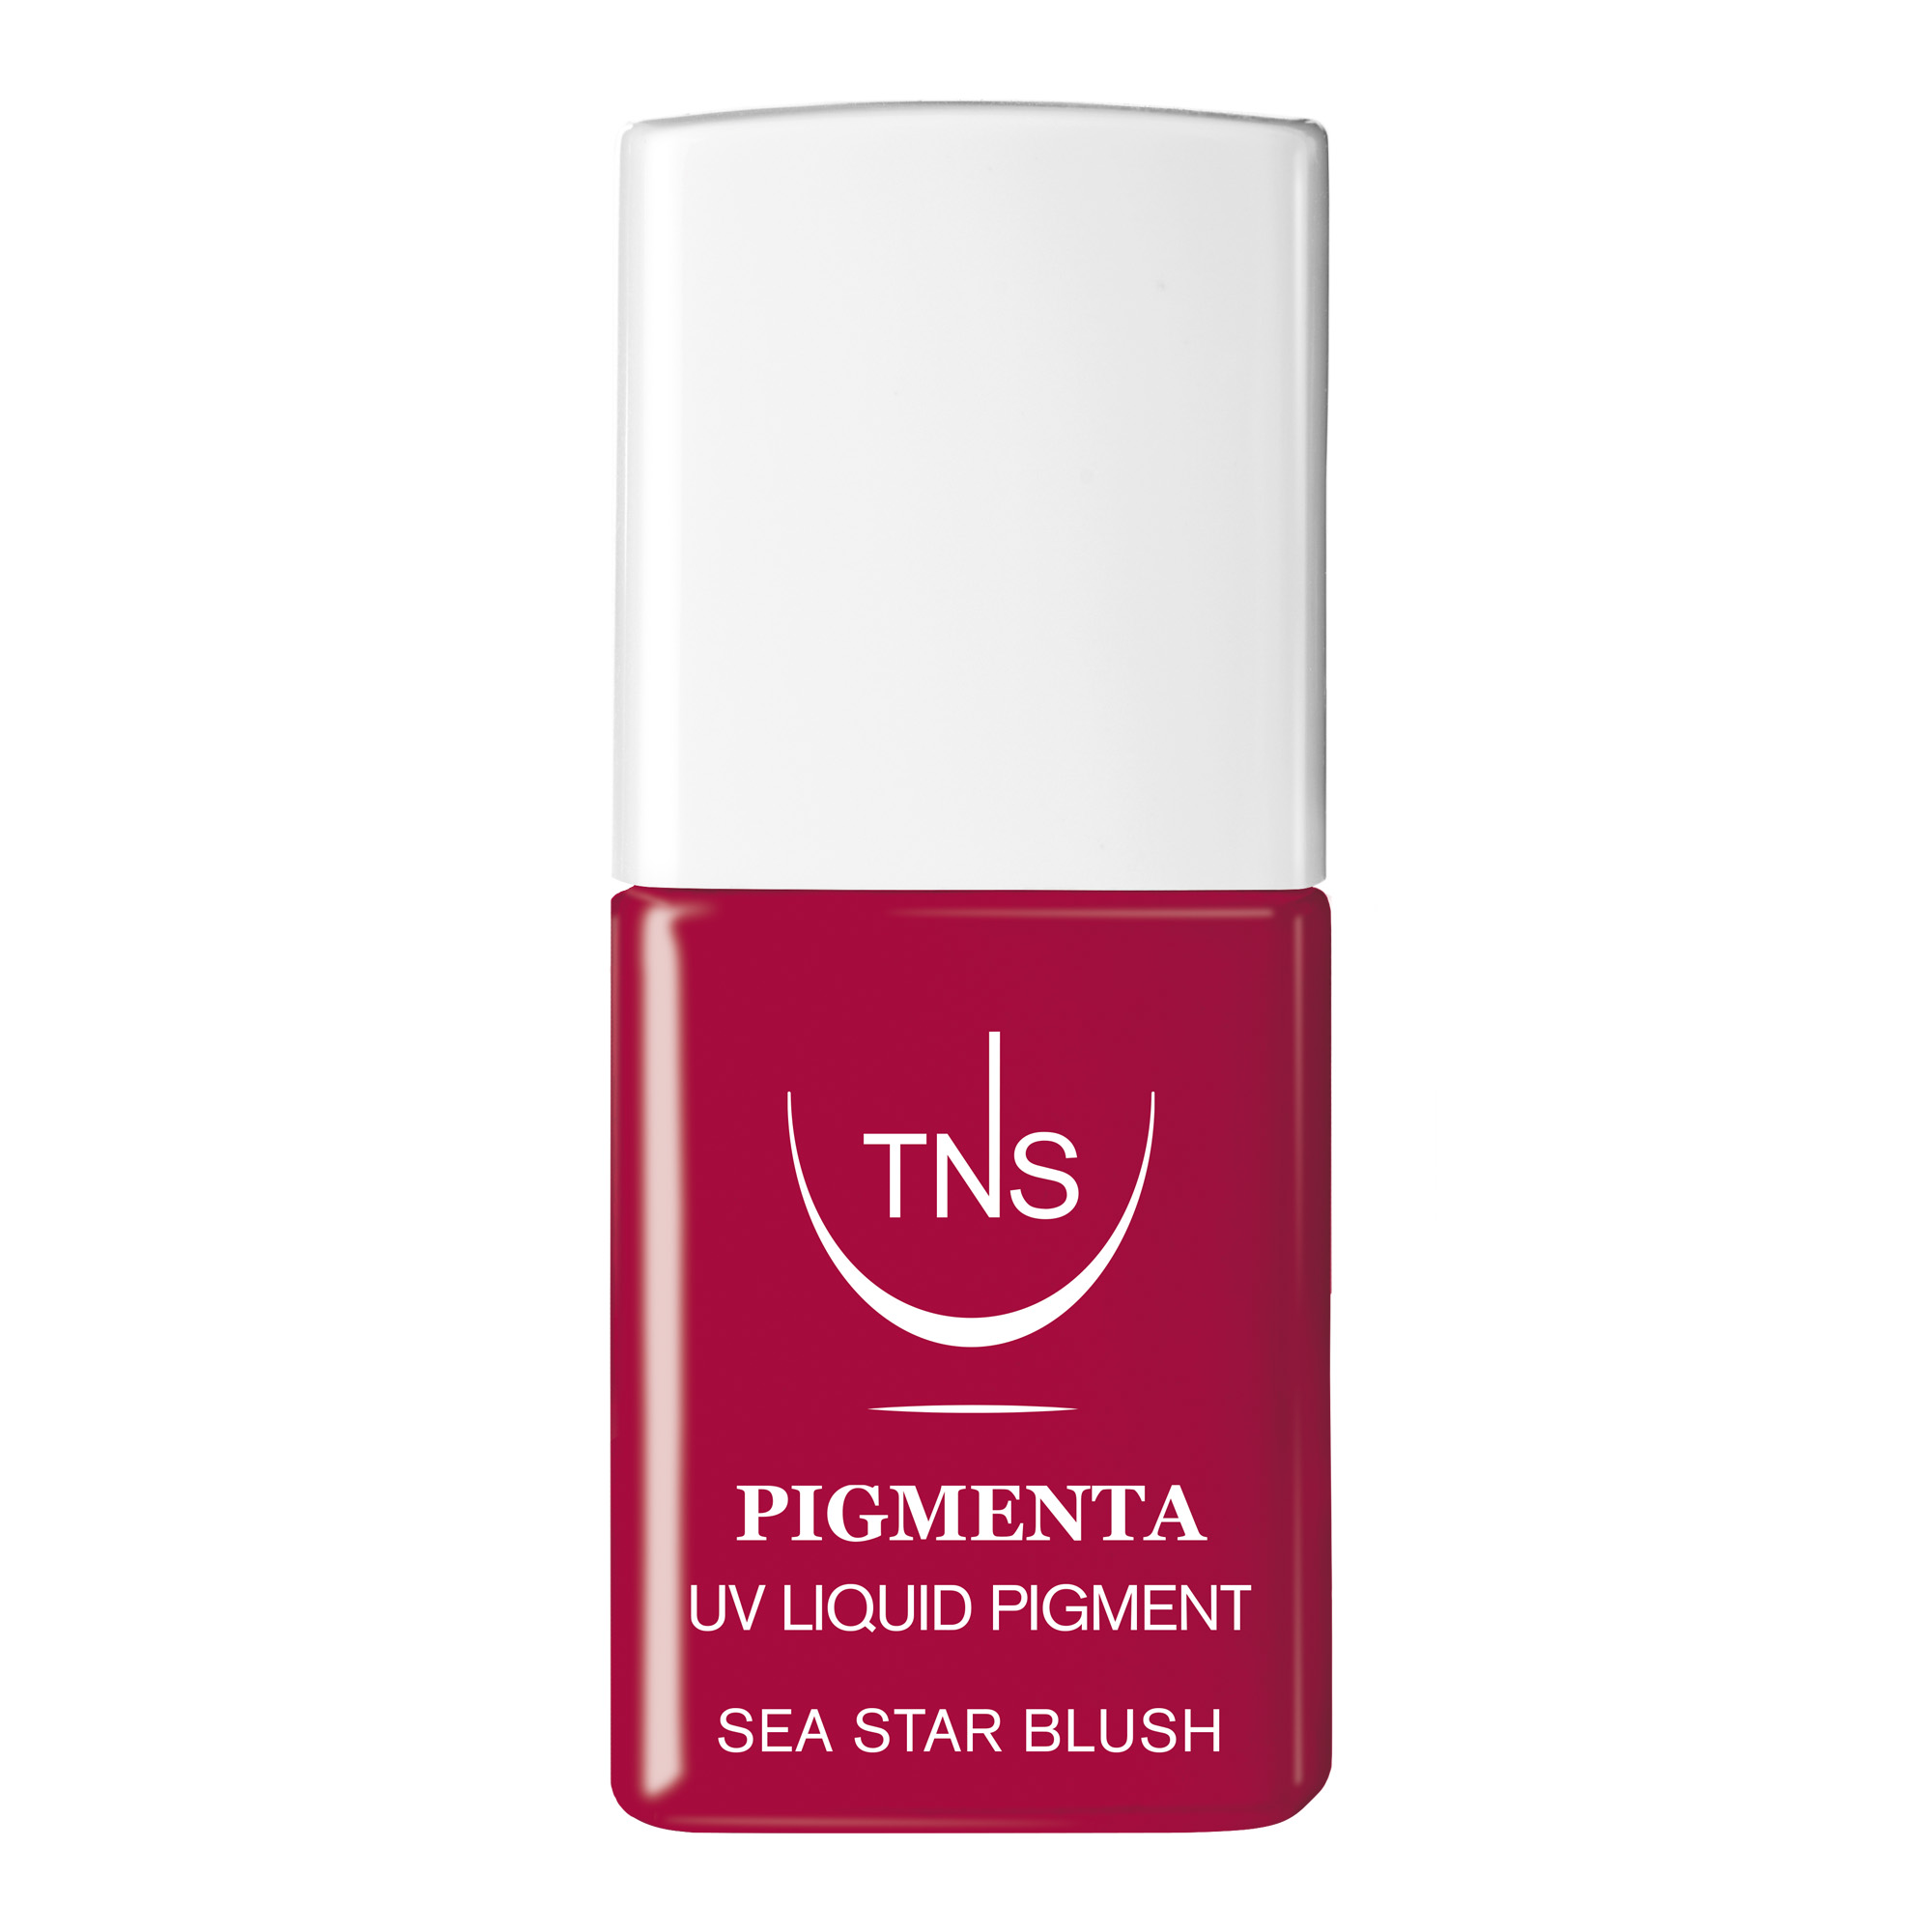 UV Liquid Pigment Sea Star Blush bright burgundy 10 ml Pigmenta TNS